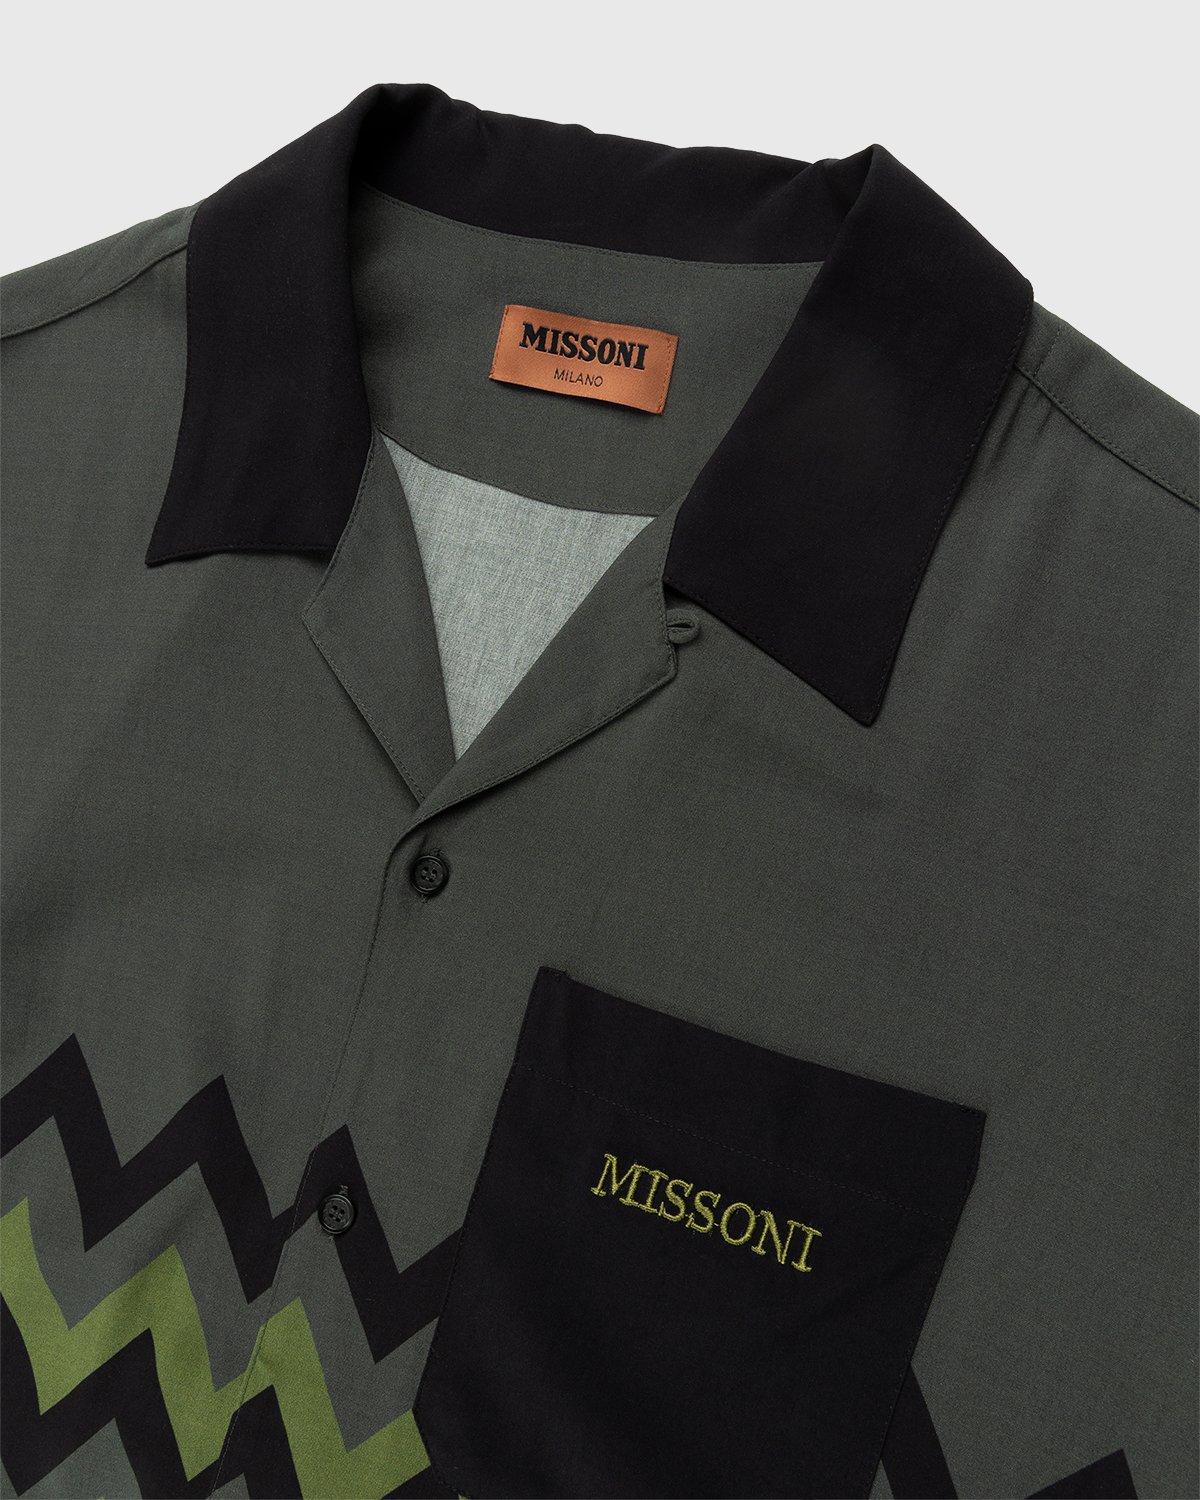 Missoni - Zig Zag Camp Shirt Green - Clothing - Multi - Image 4